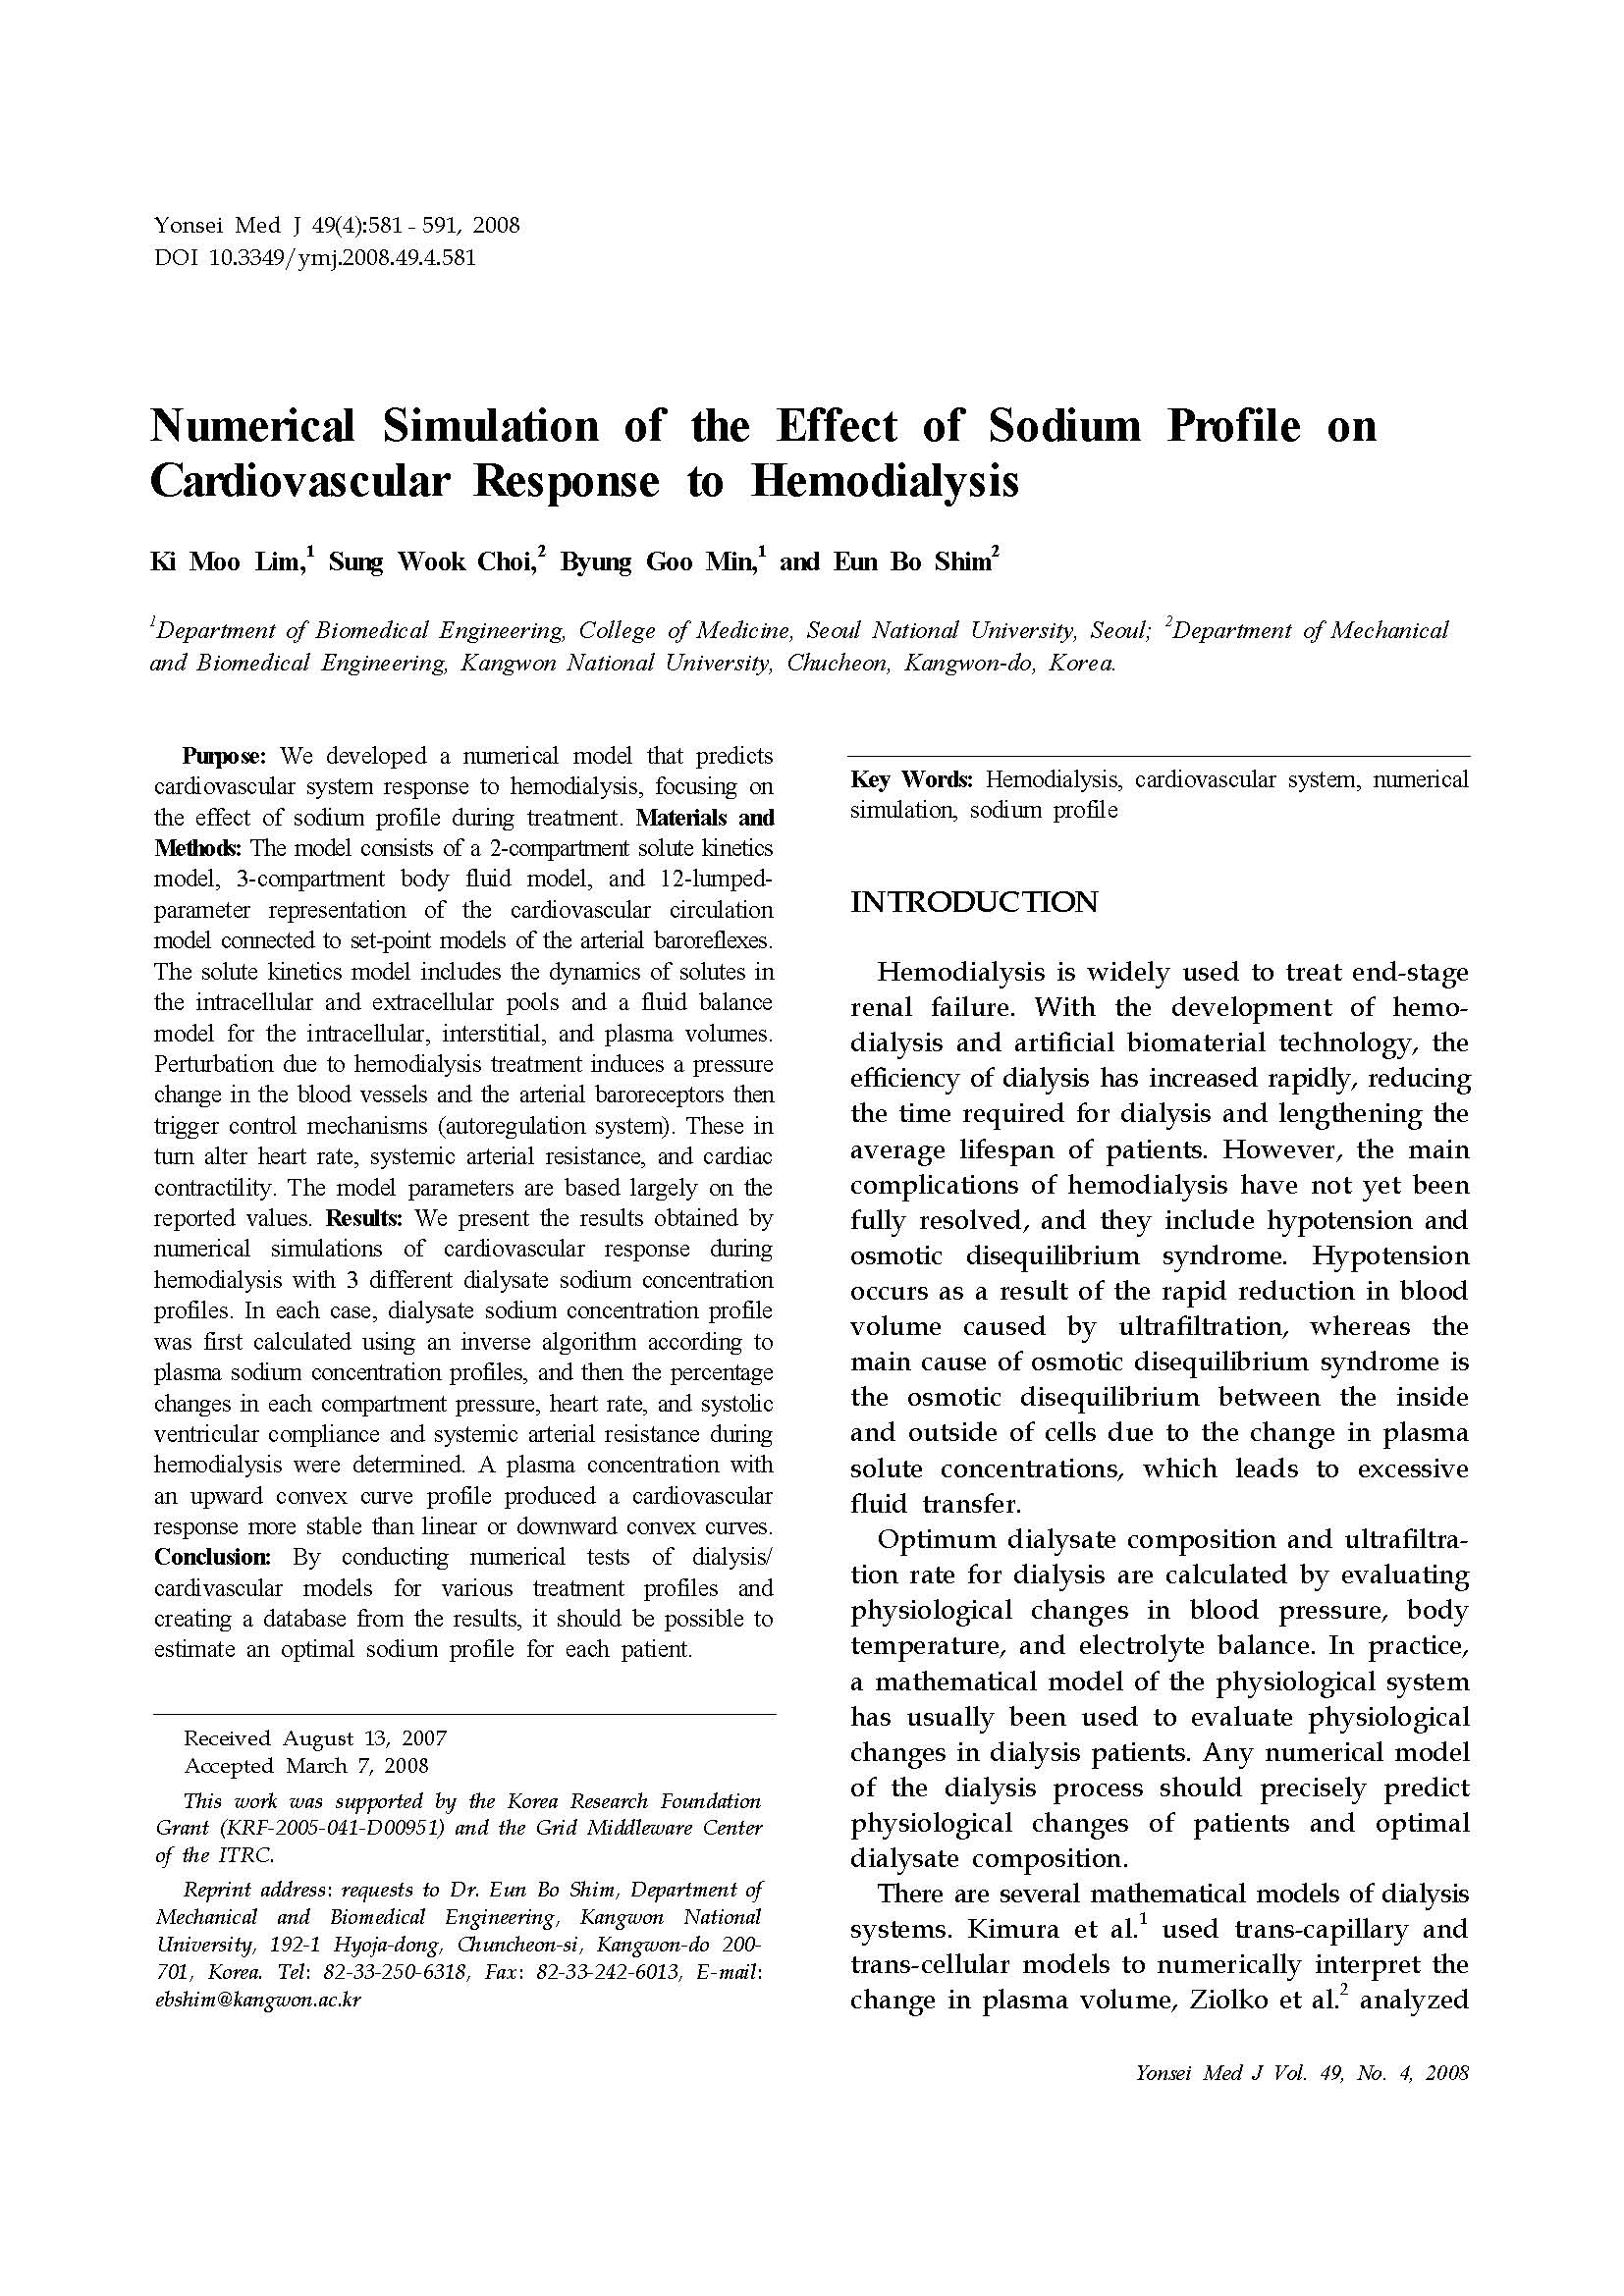 Numerical Simulation of the Effect of Sodium Profile on Cardiovascular Response to Hemodialysis.jpg 1654X2339